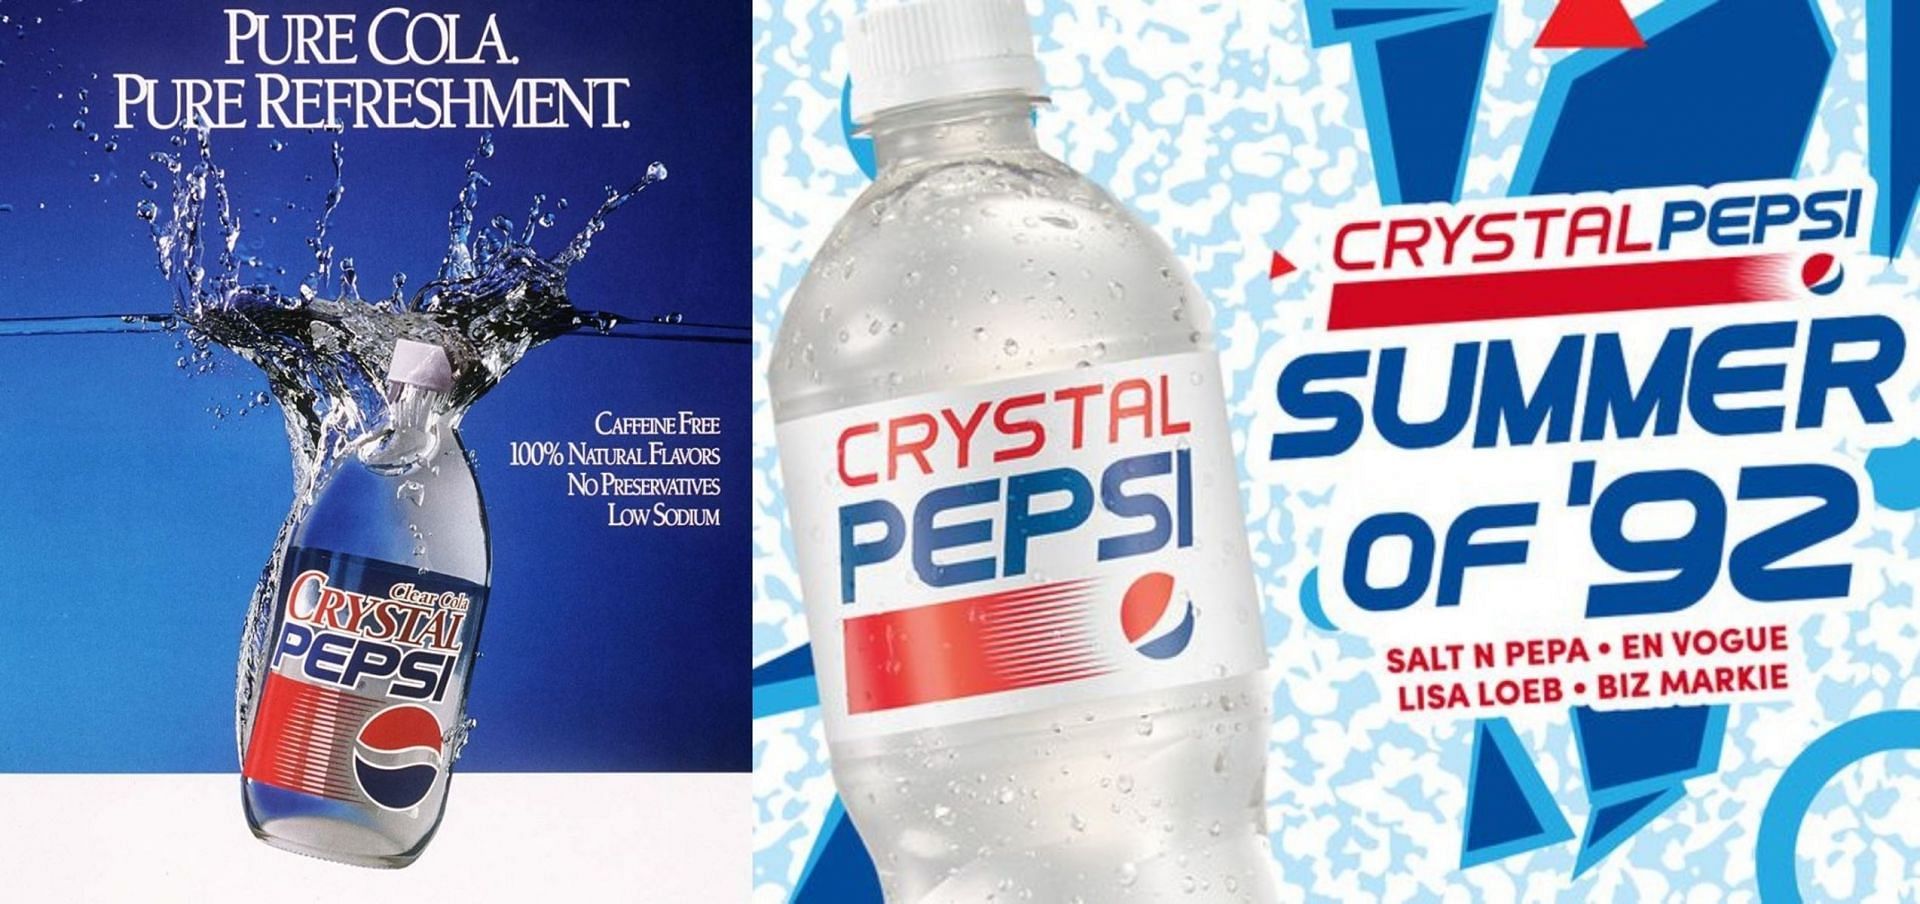 The Crystal Pepsi (Image via PepsiCo)